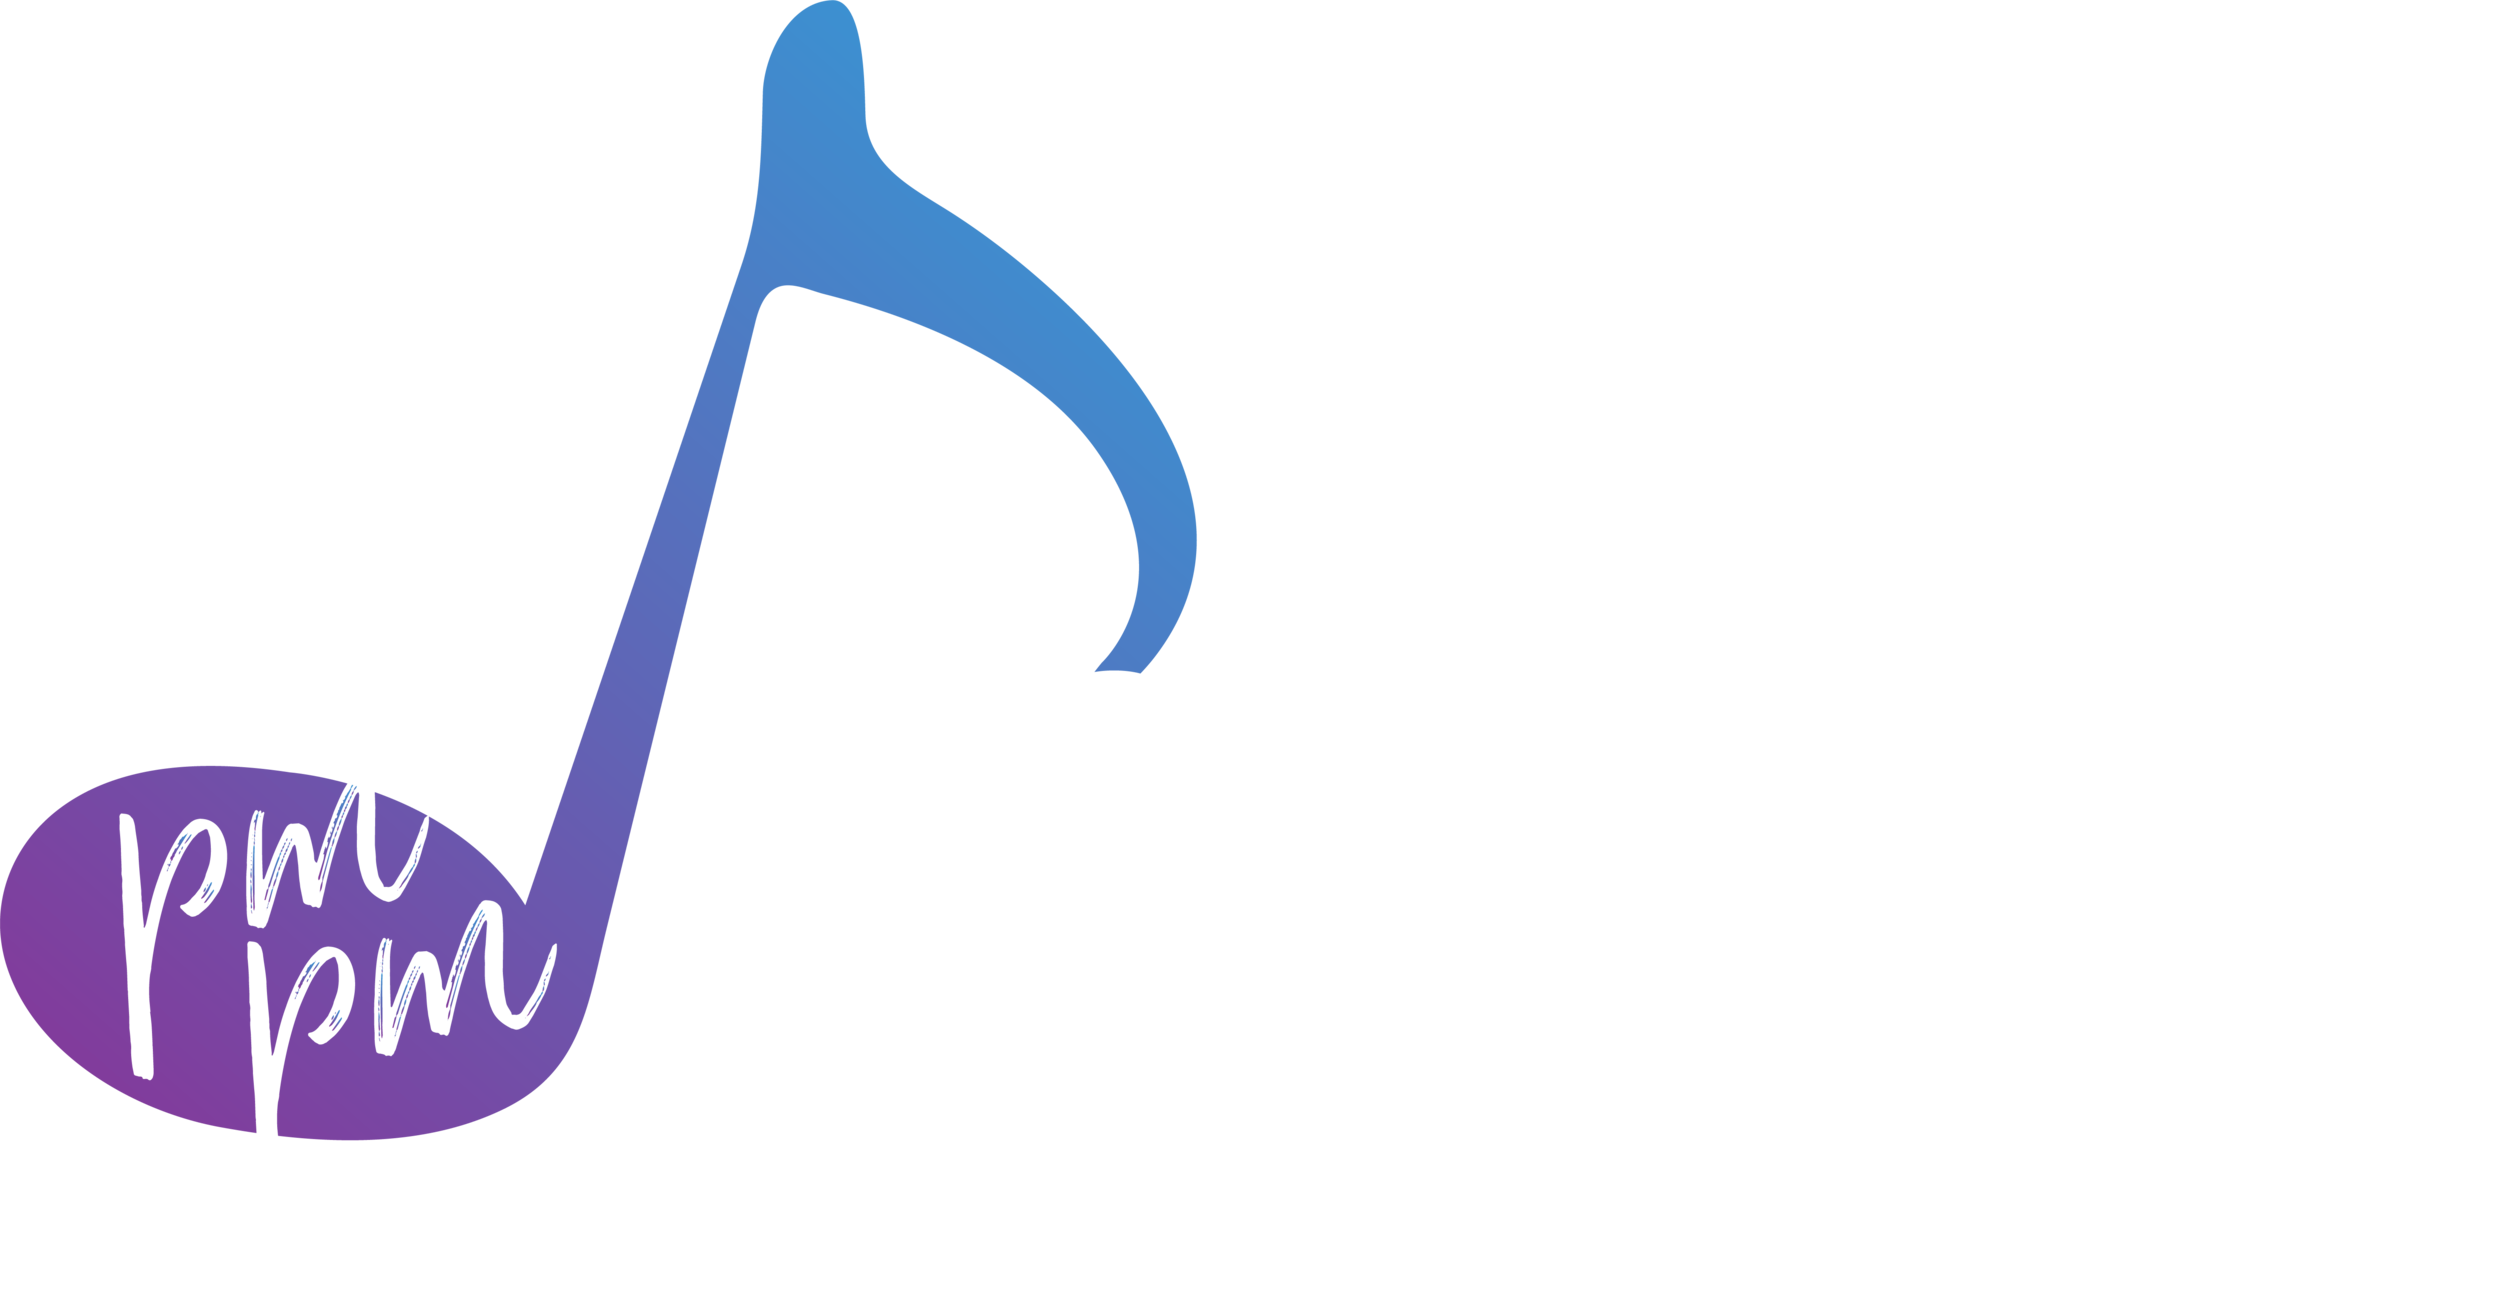    Positive Music Positive Minds